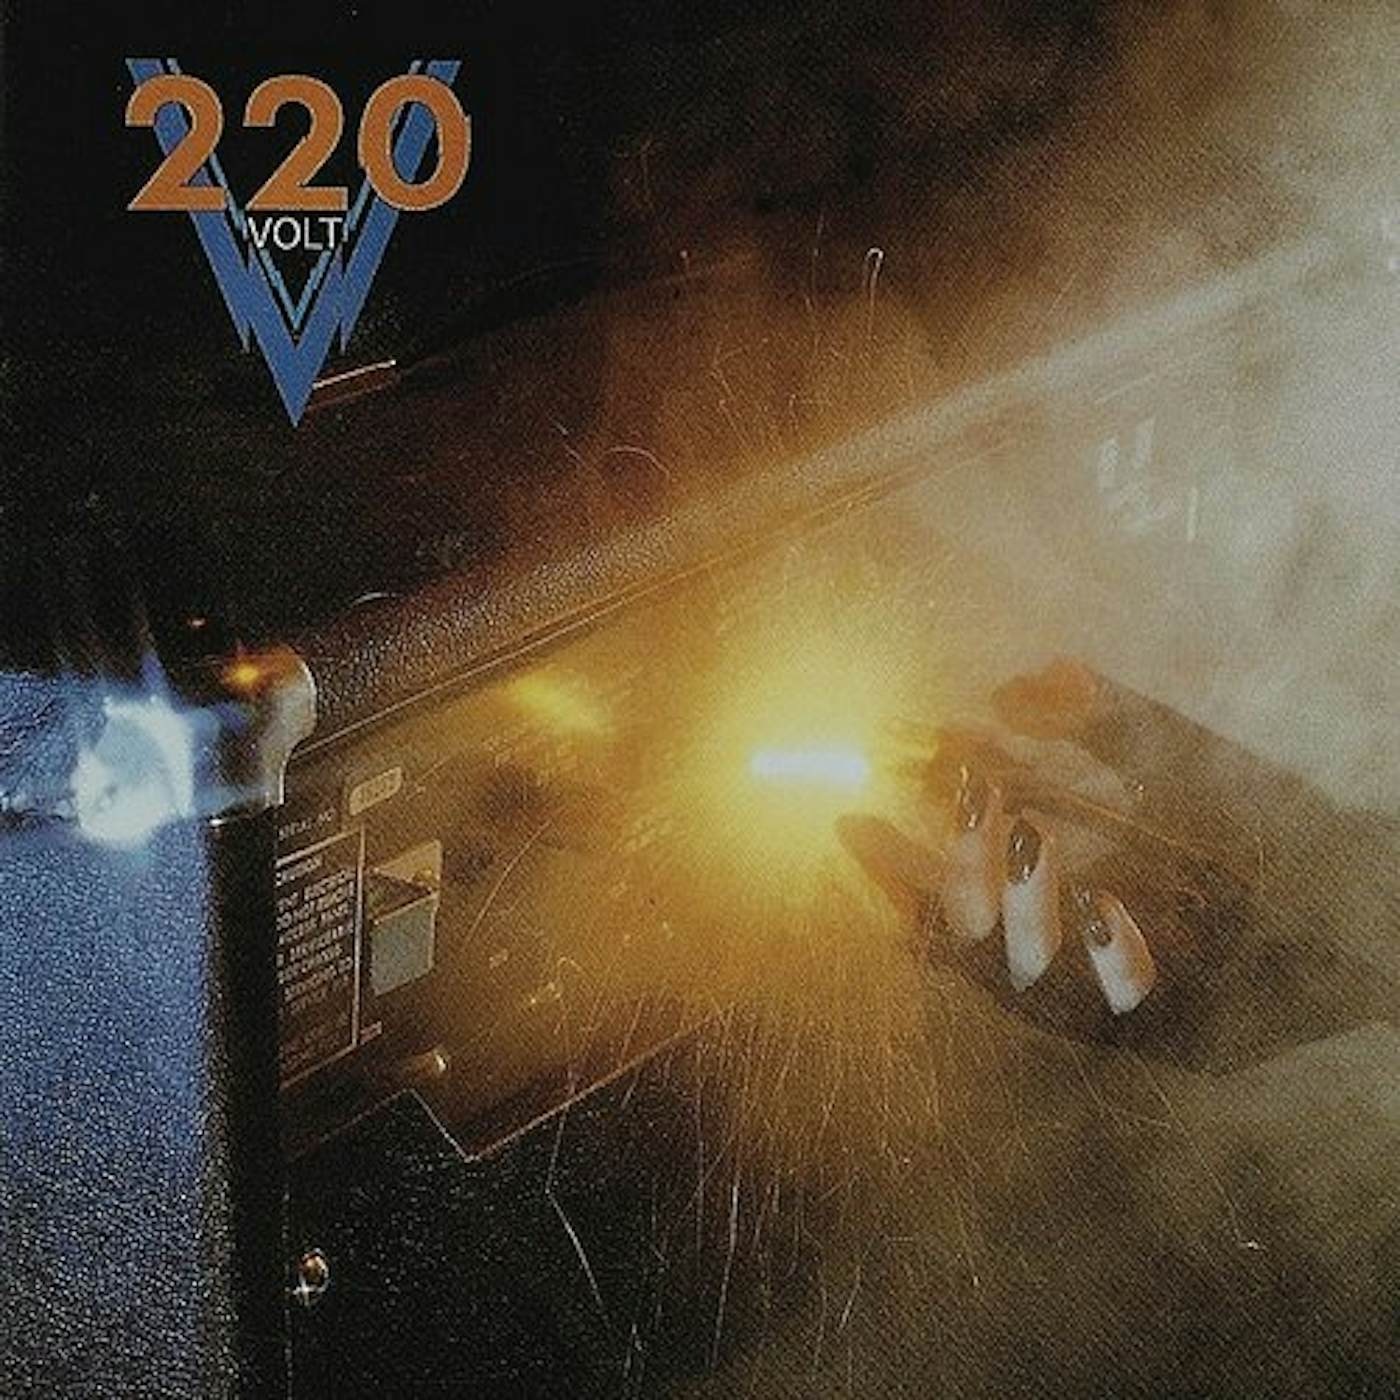 220 VOLT (180G/YELLOW & ORANGE MARBLED VINYL) Vinyl Record